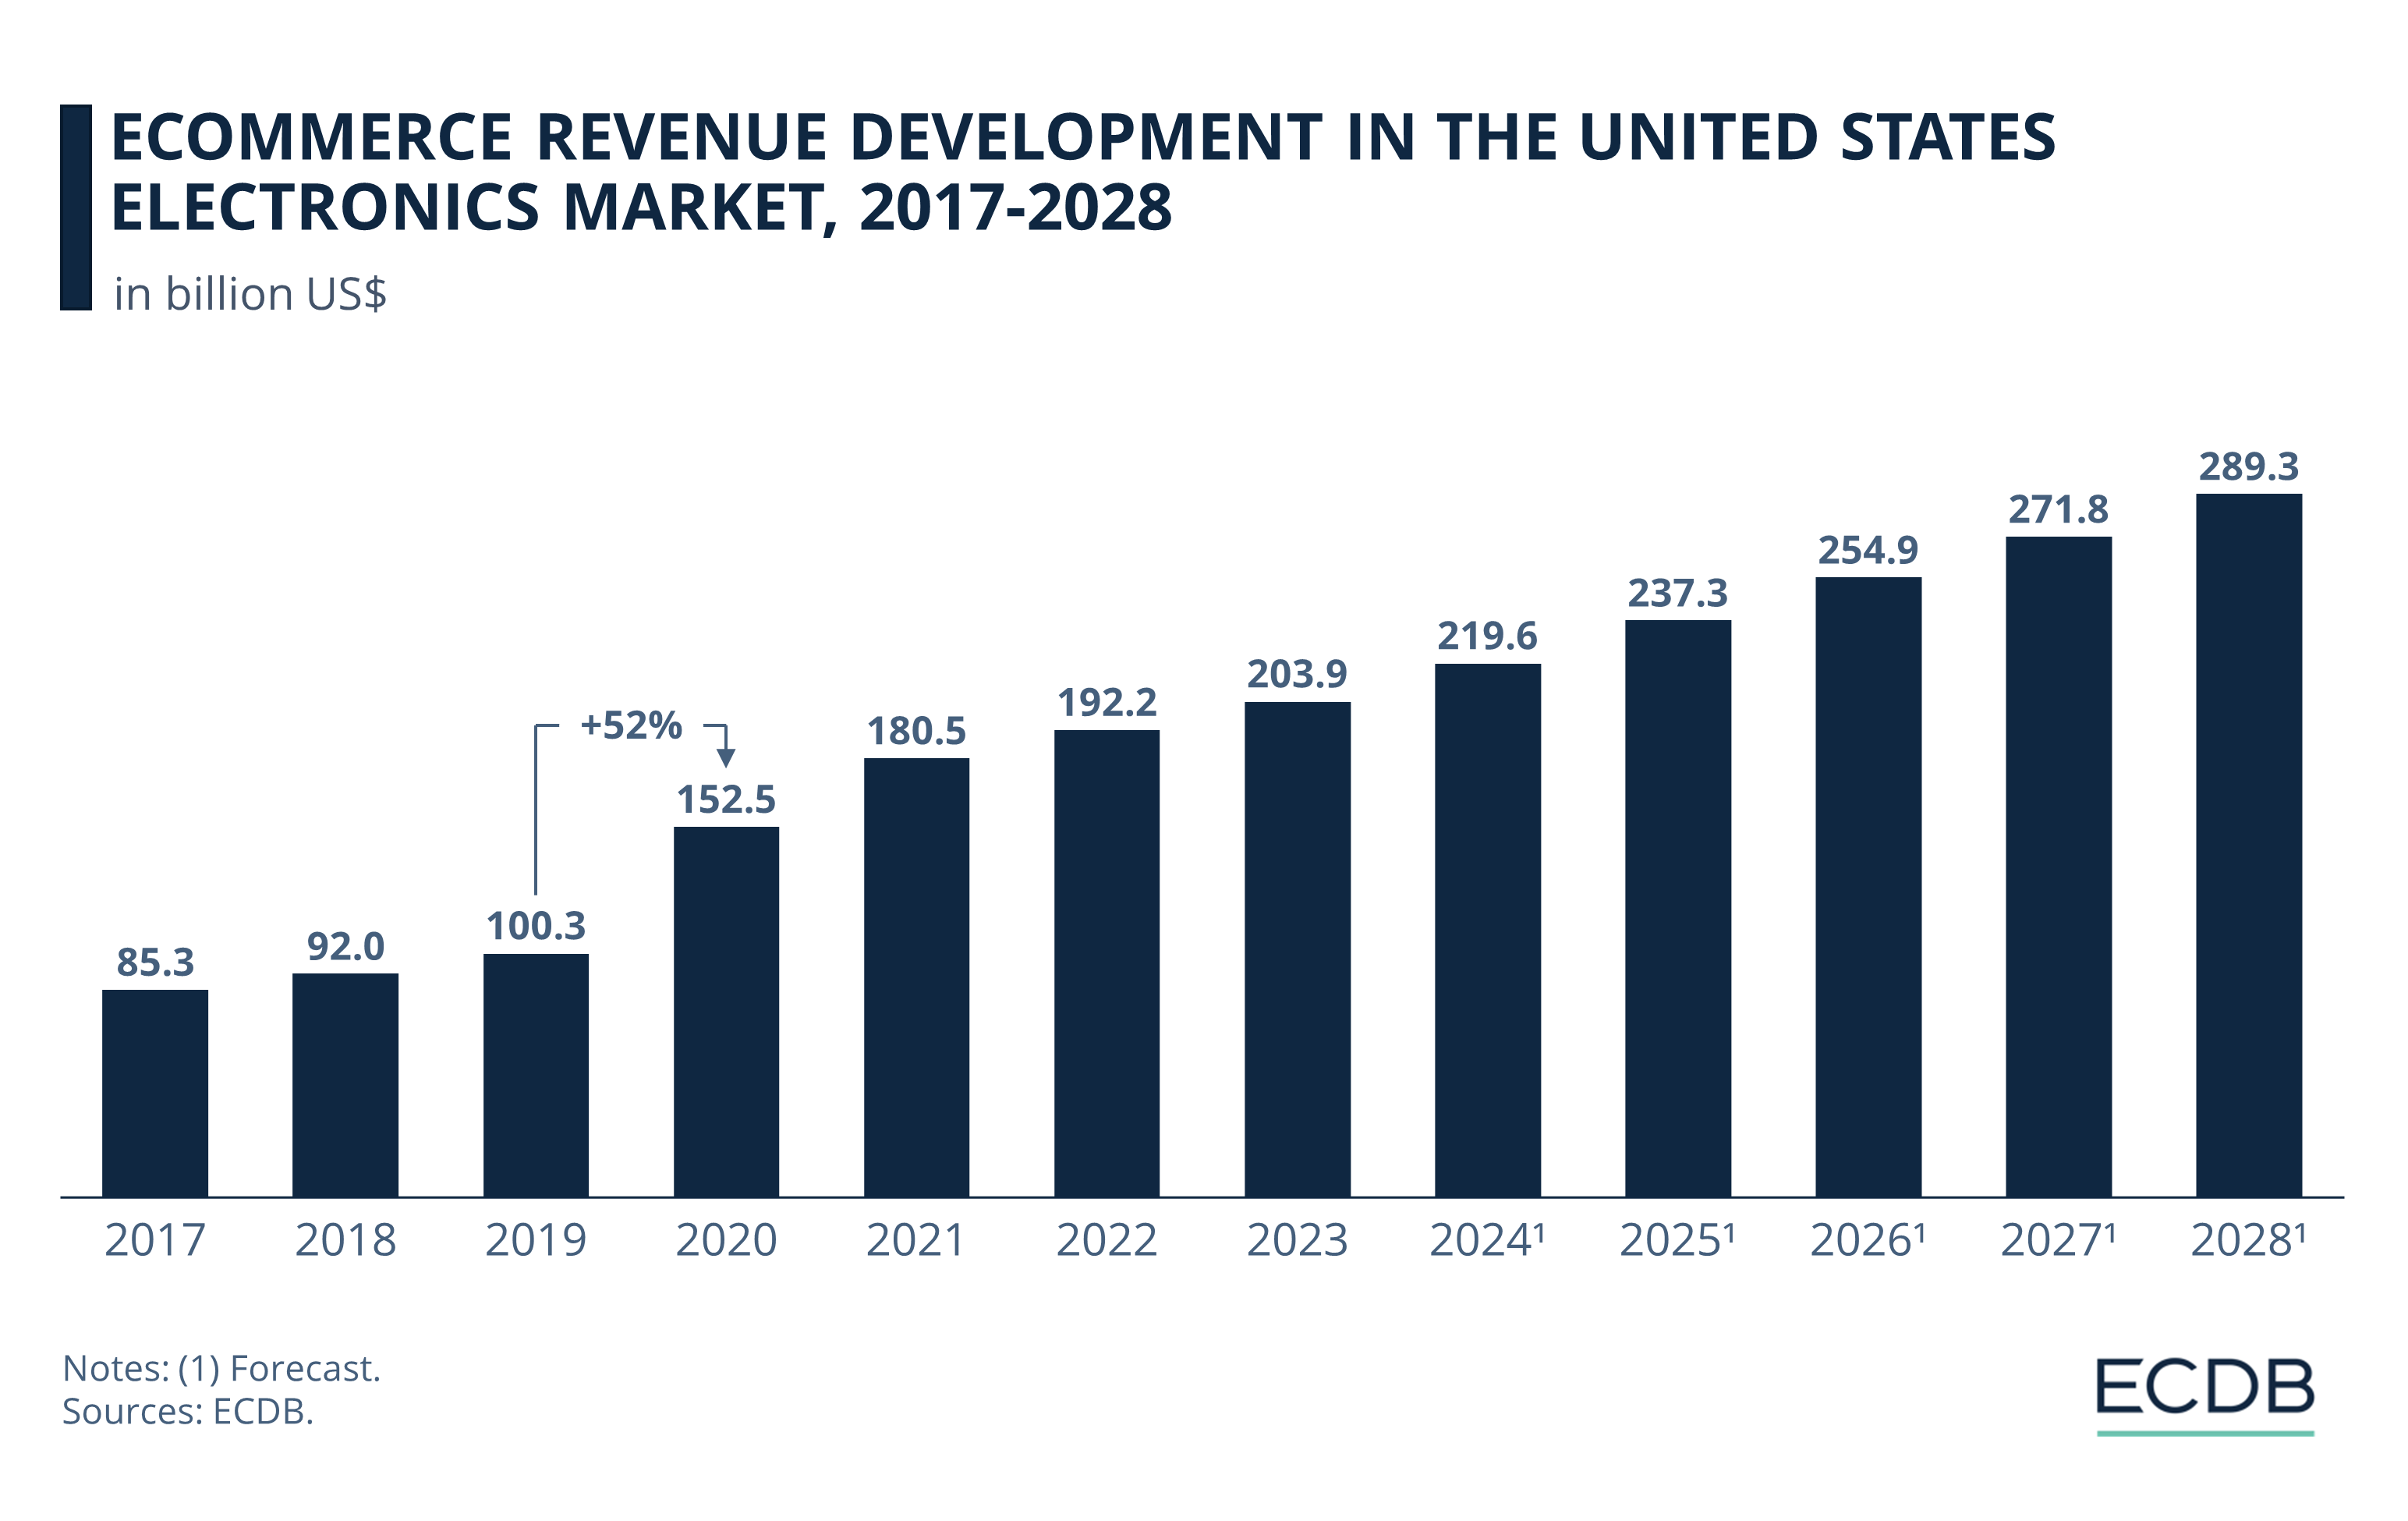 eCommerce Revenue Development in the United States Electronics Market, 2017-2028